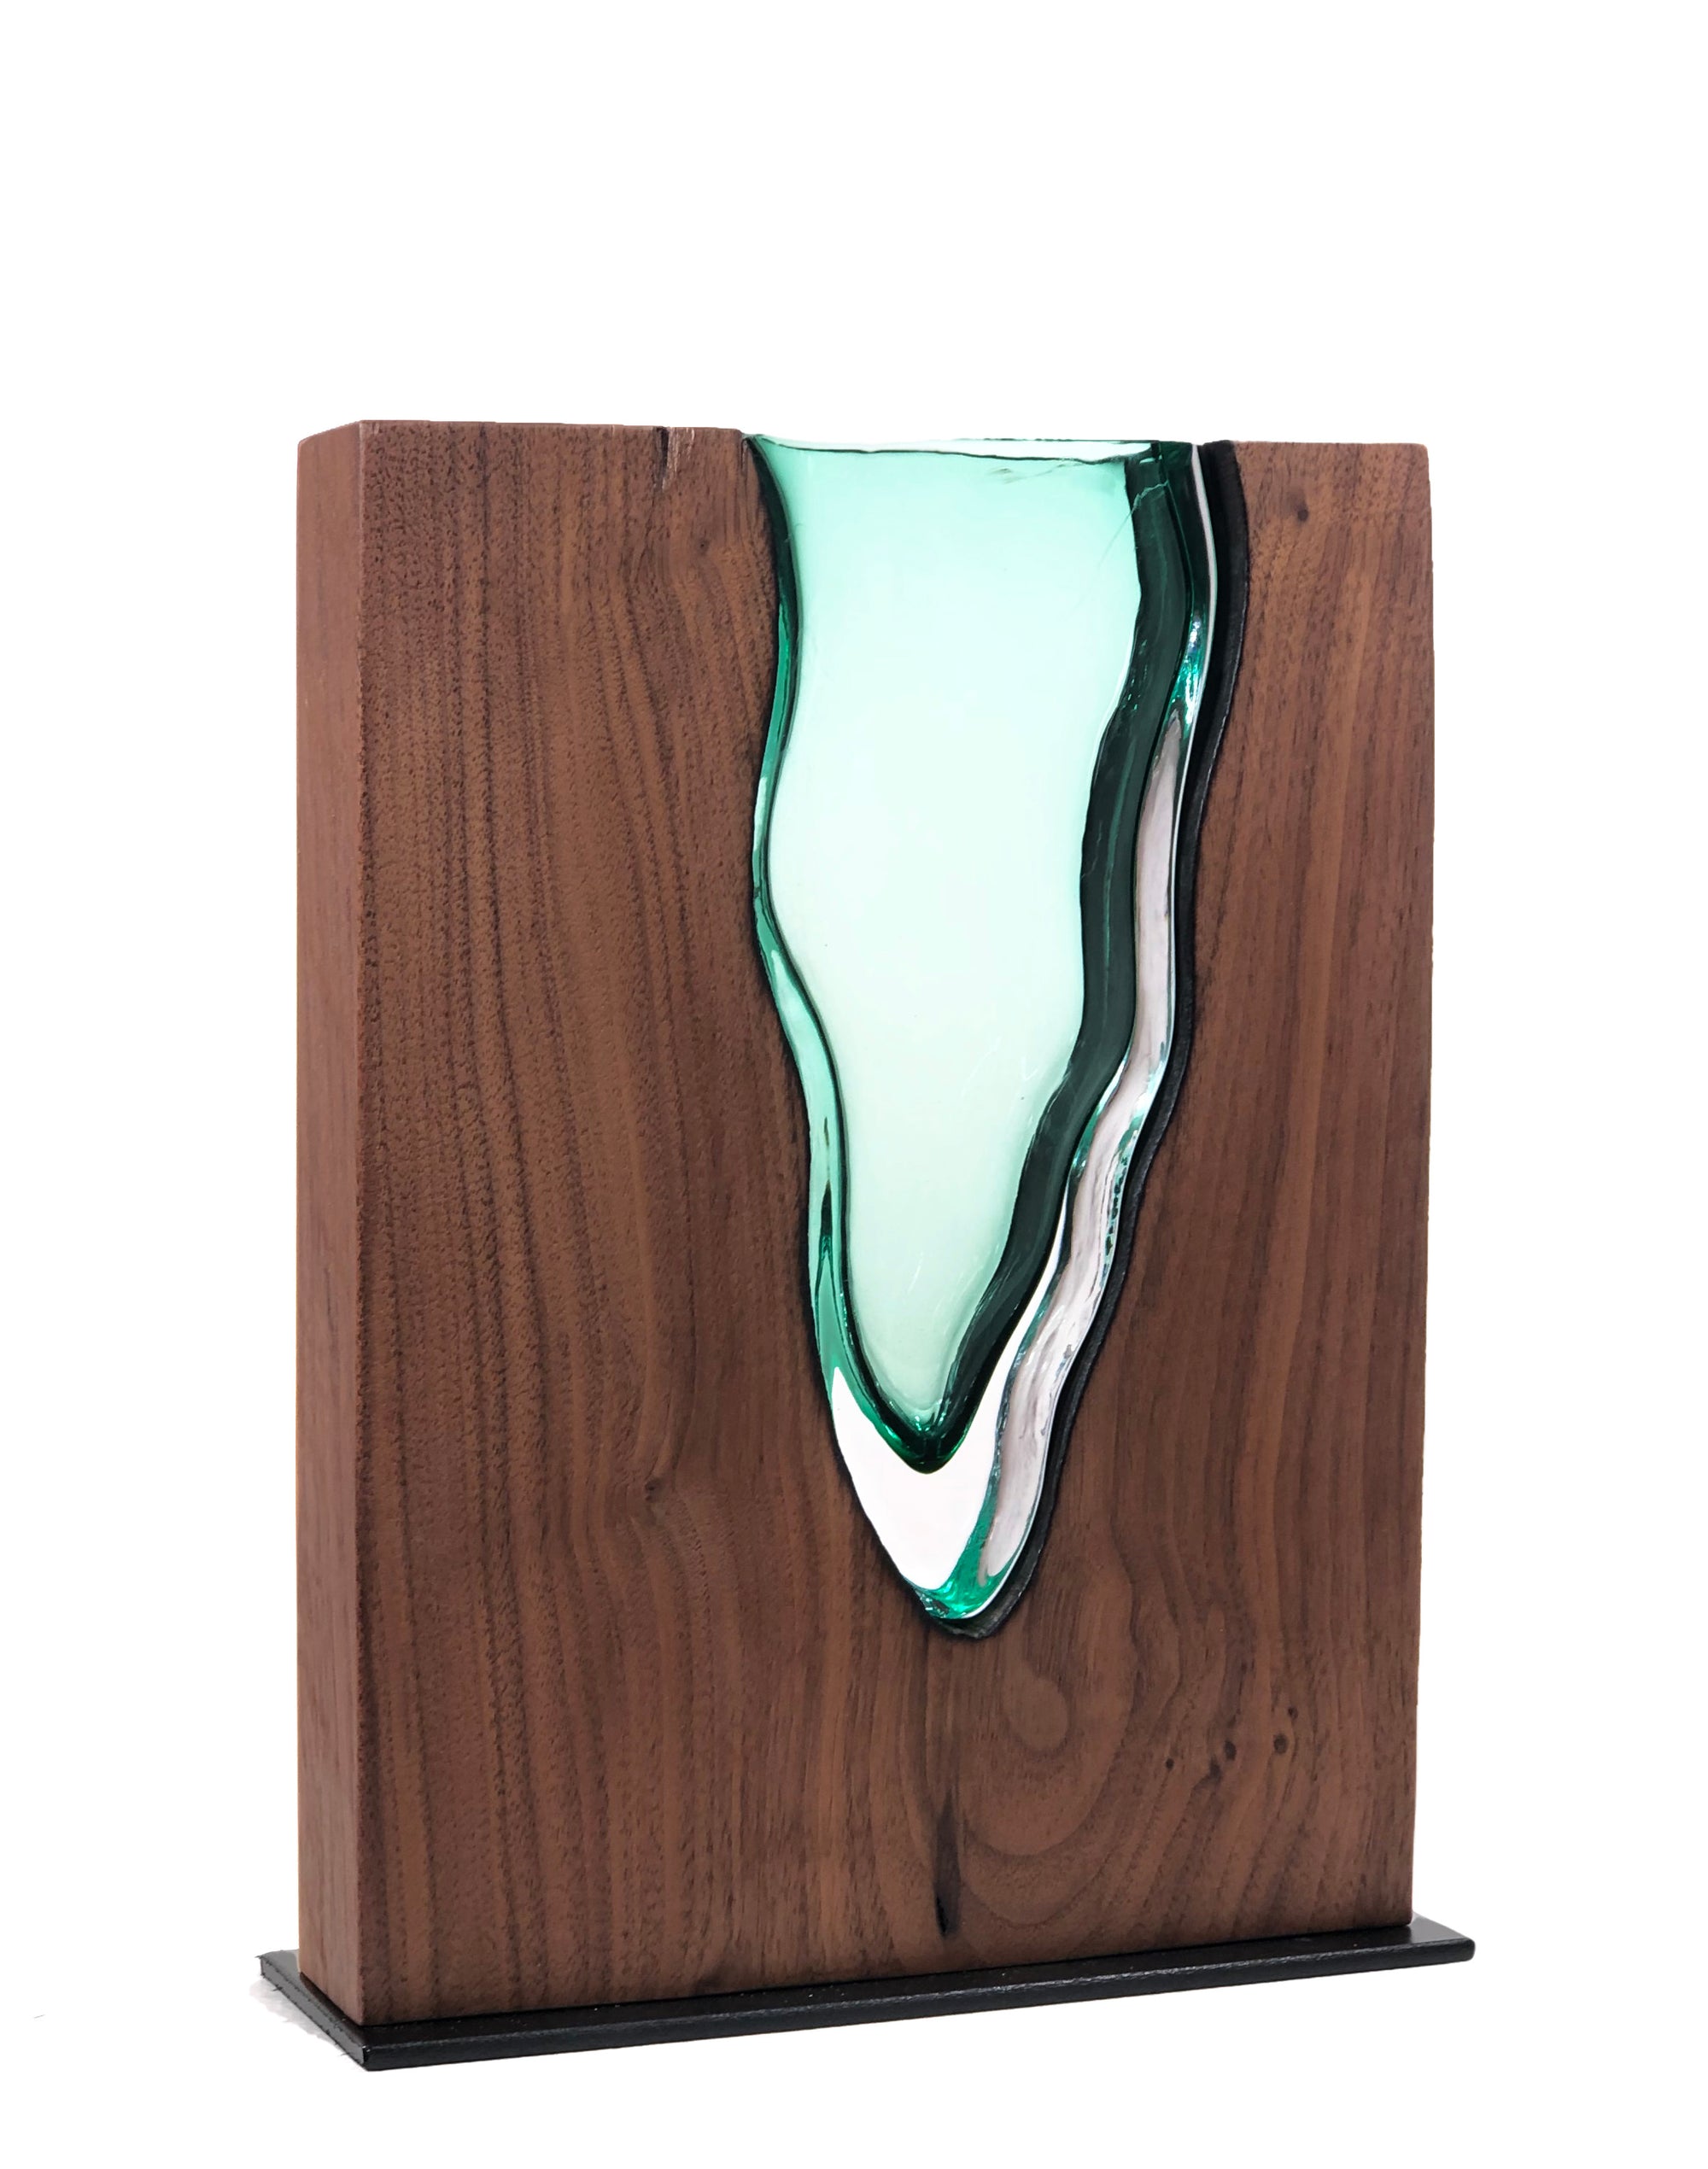 Clean Cut Walnut Wood with Handblown Emerald Glass "Lake"